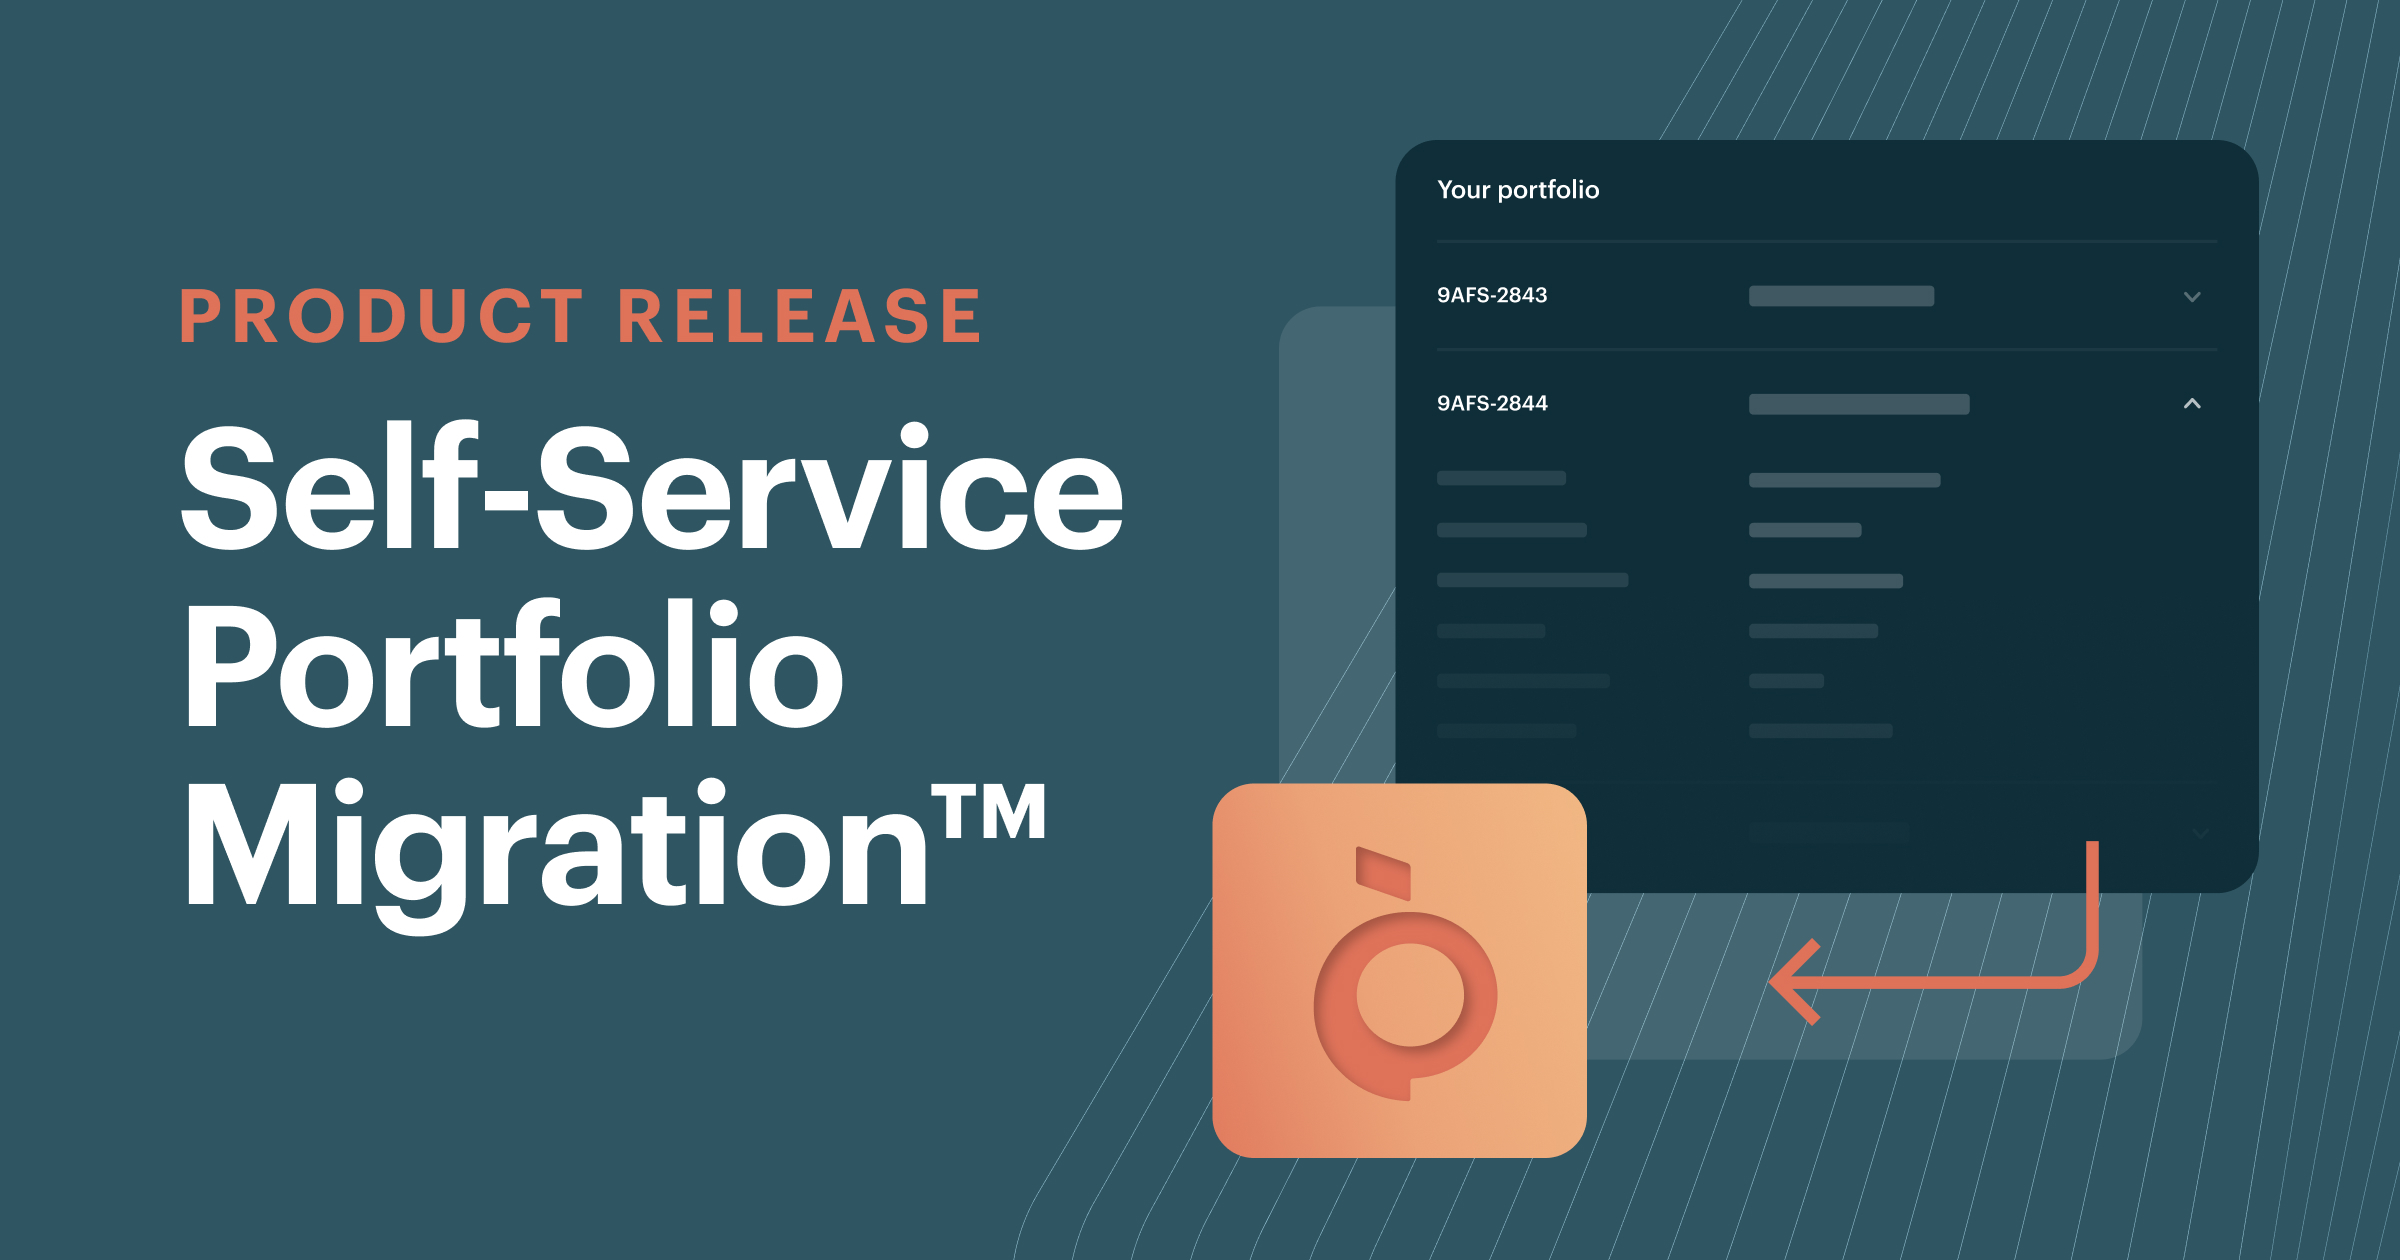 Peach releases its Self-Service Portfolio Migration™ capability